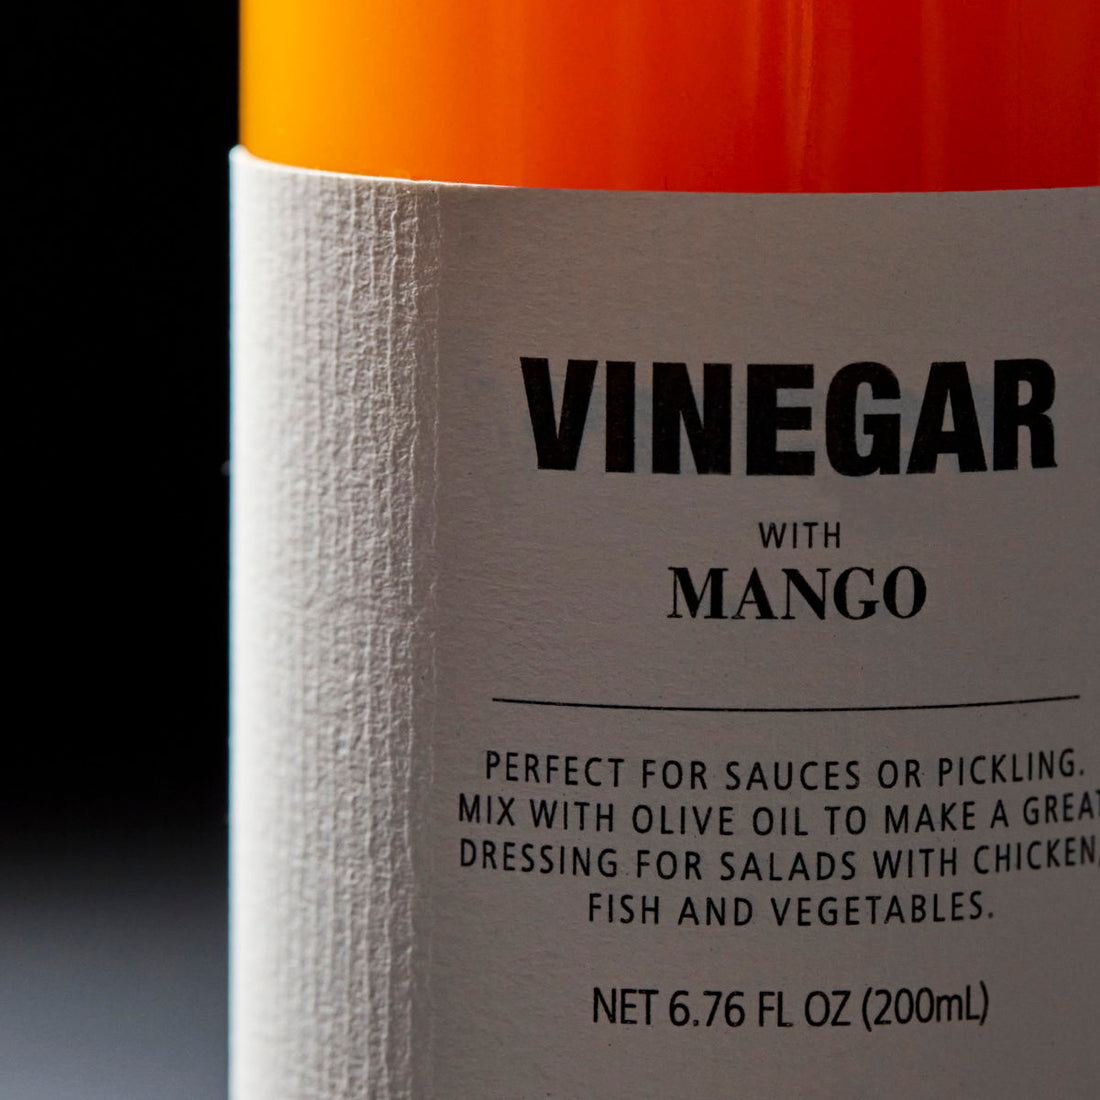 Nicolas Vahé Vinegar - Mango